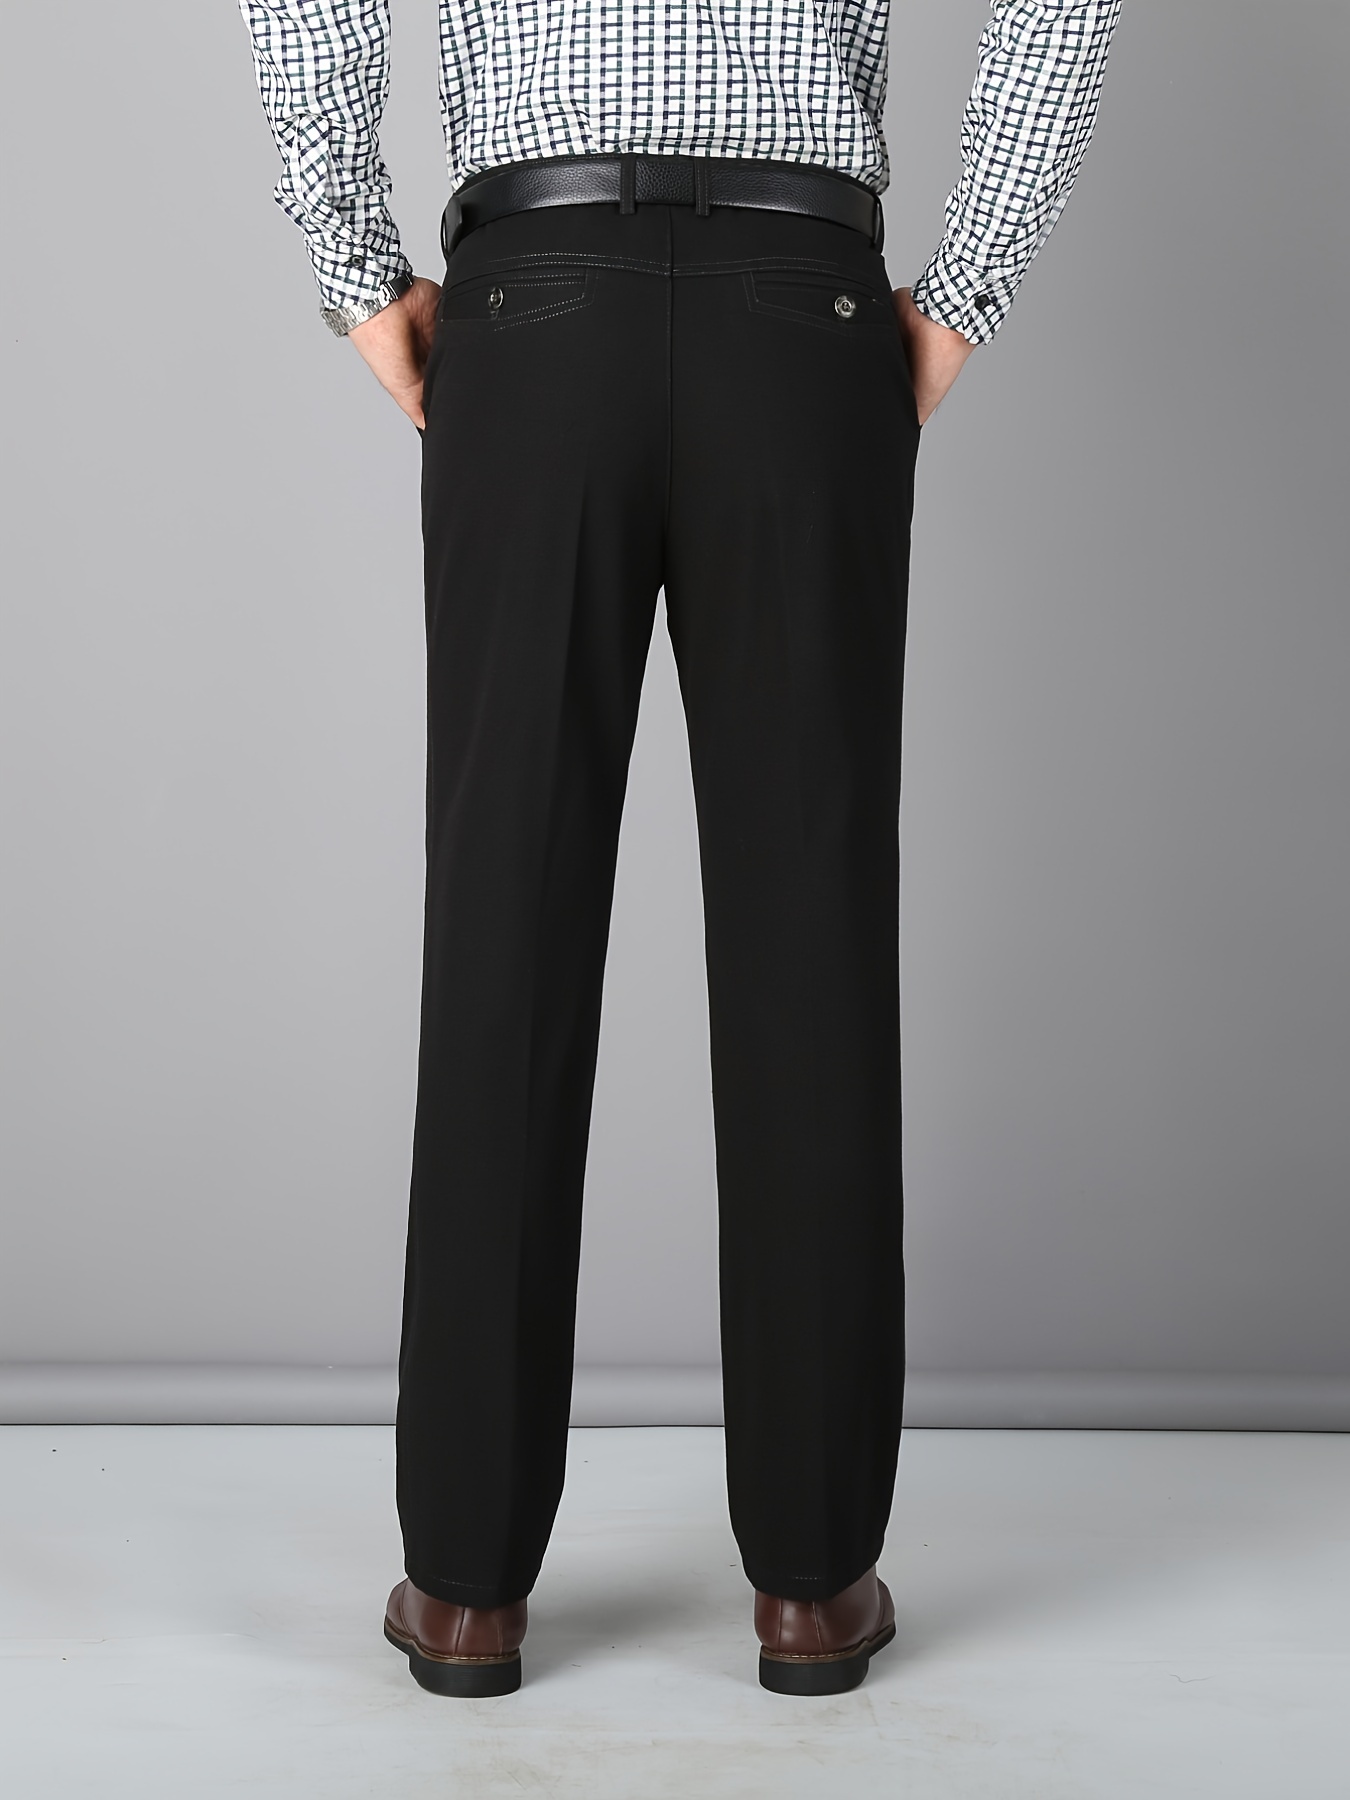 Men's Cotton Formal Trousers - Solid Black